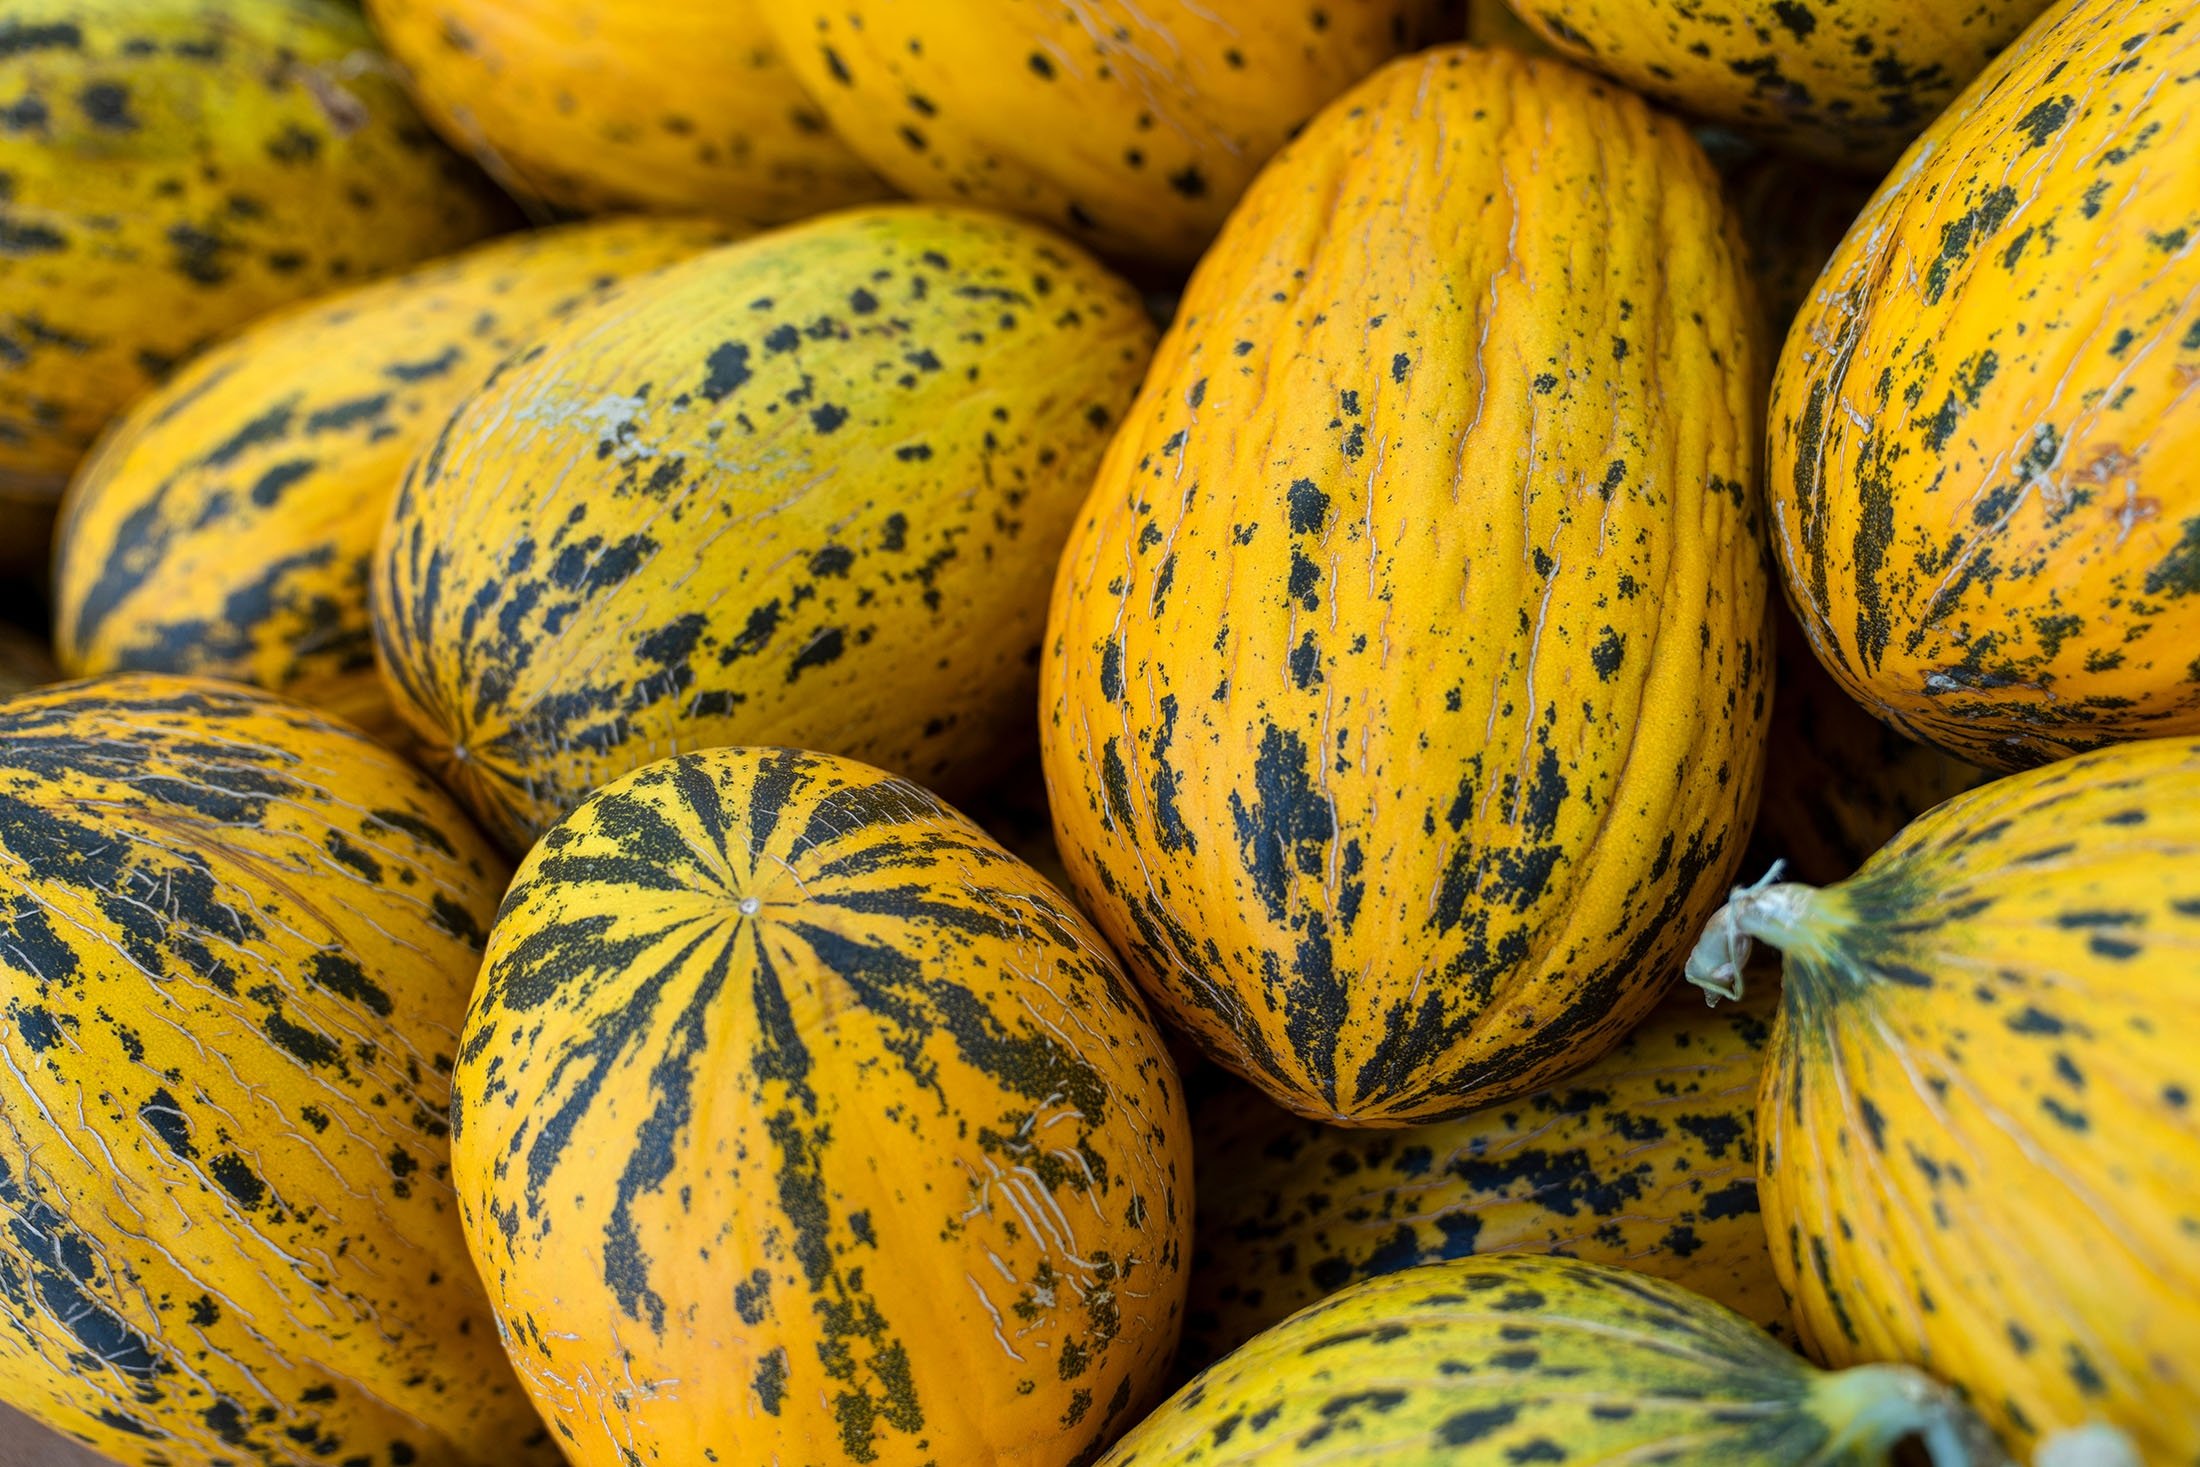 Manisa is famous for its Kırkağaç melons. (Shutterstock Photo)